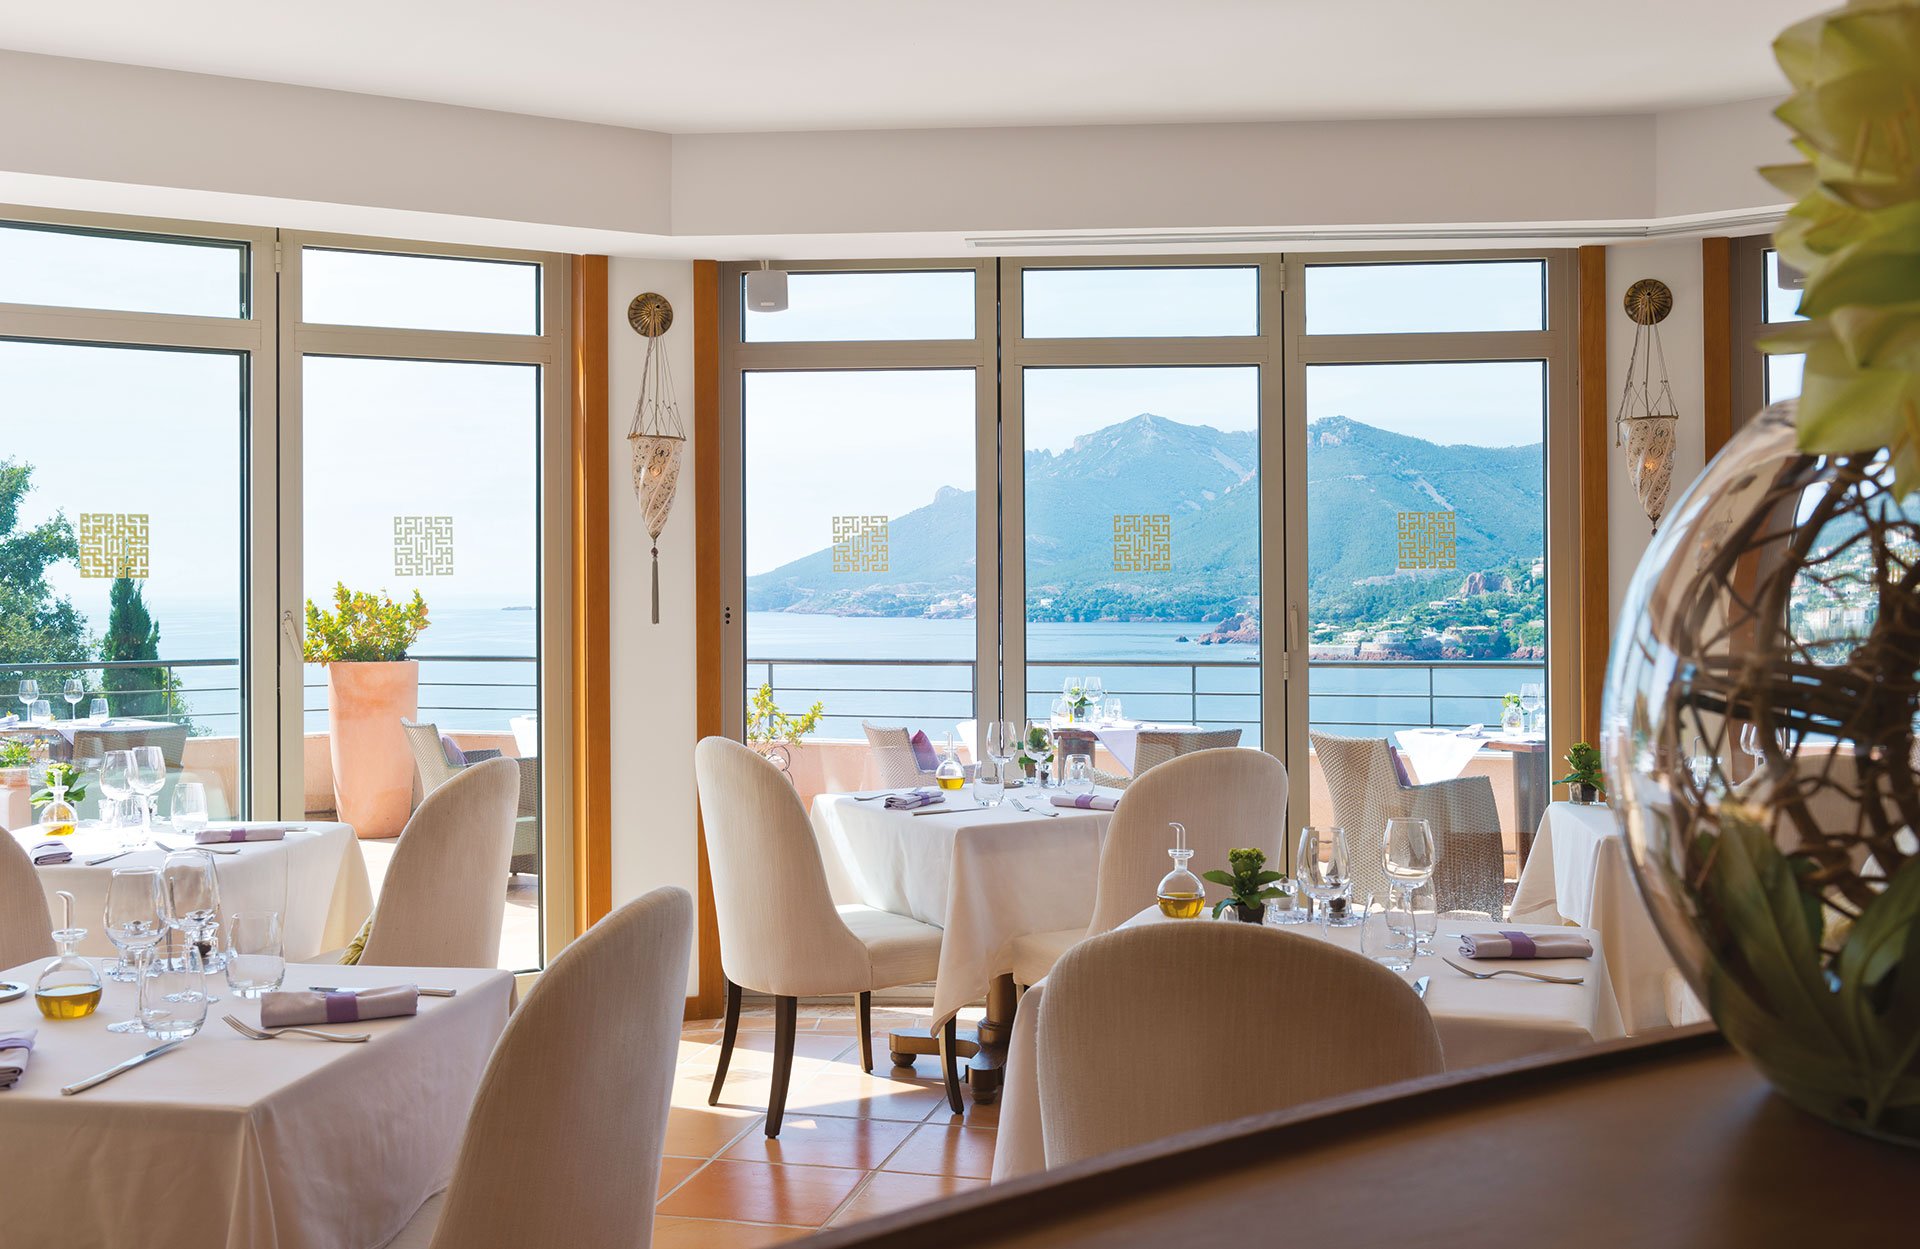 Tiara Yaktsa | Gastronomic restaurant near Cannes